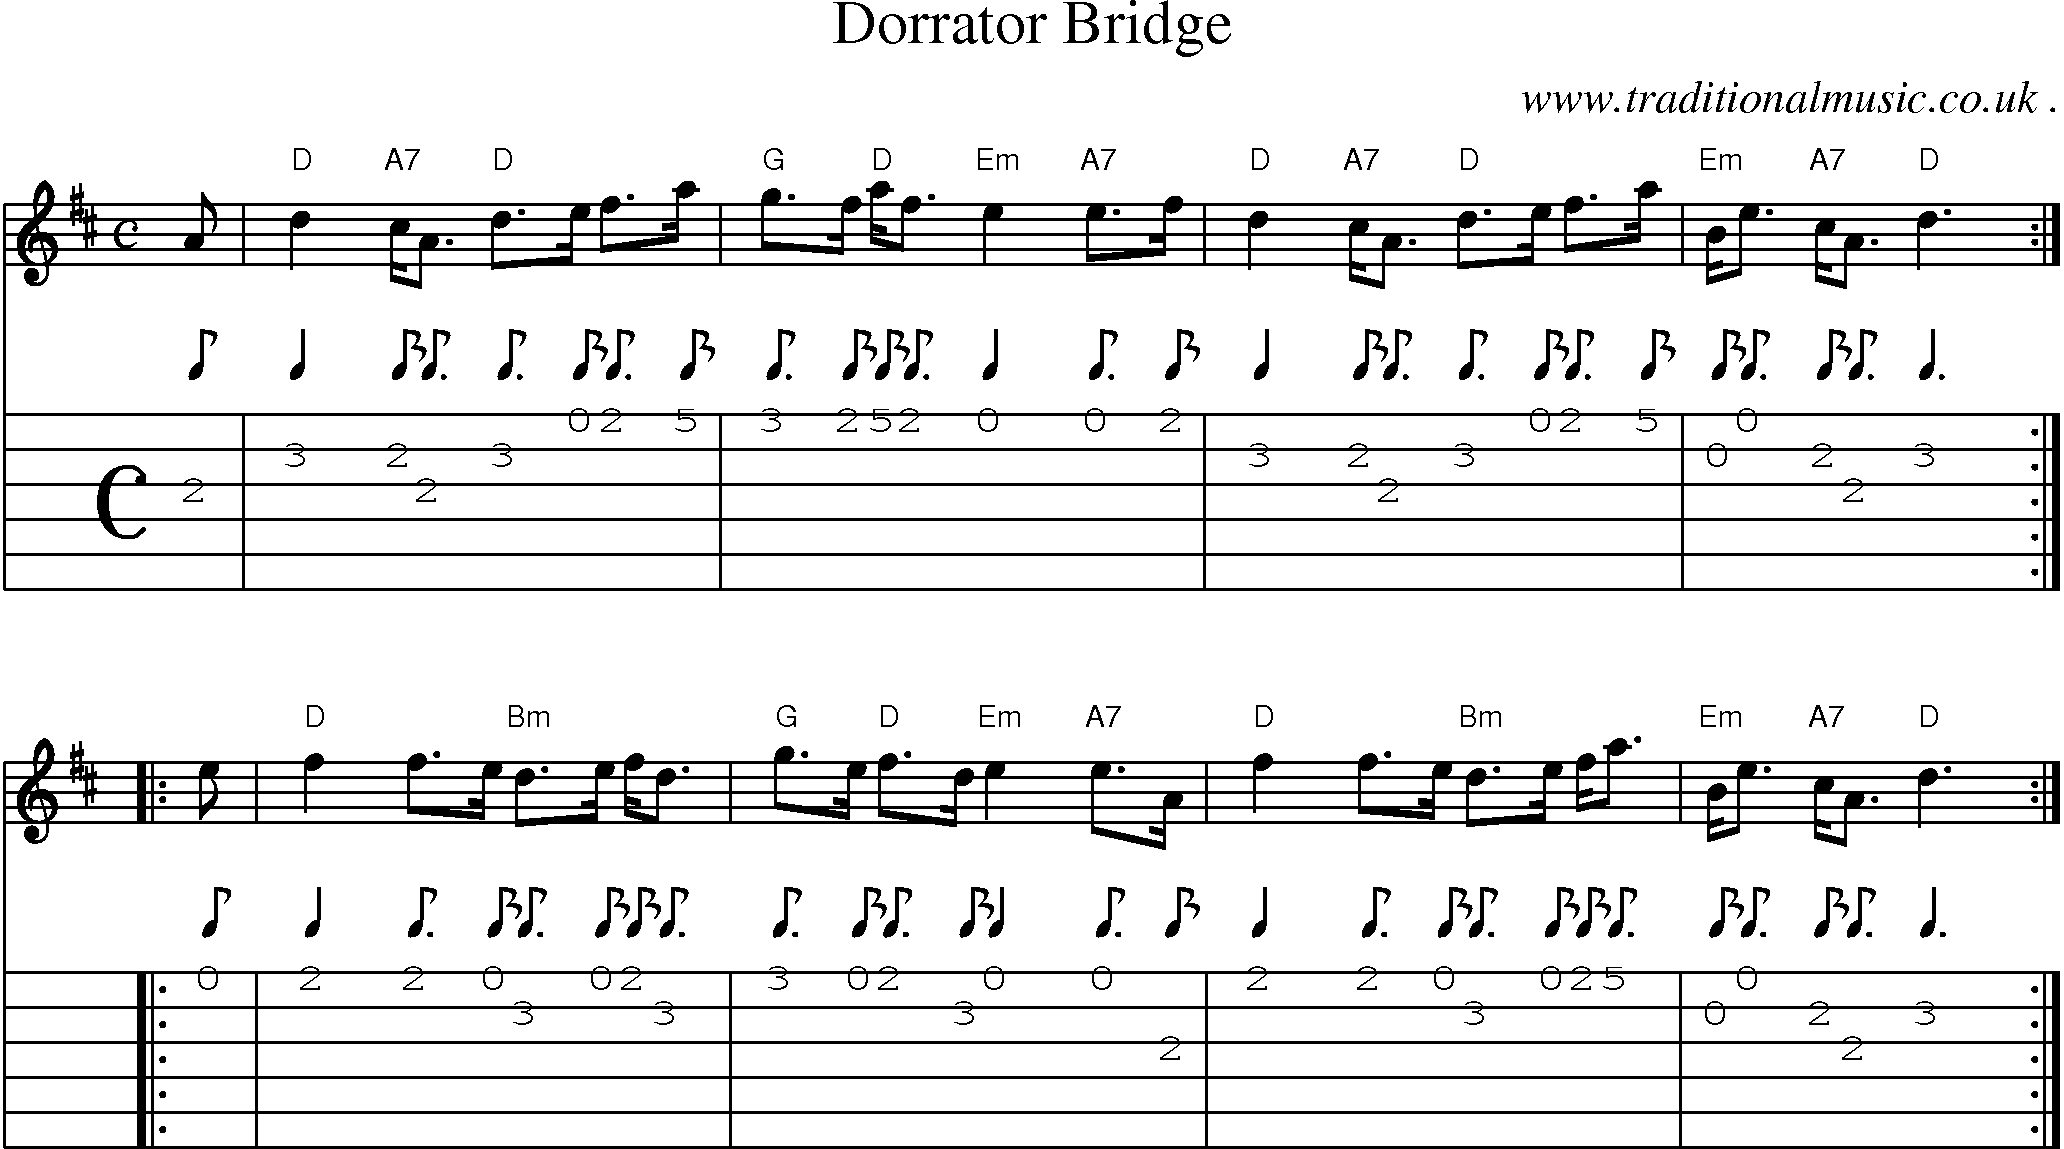 Sheet-music  score, Chords and Guitar Tabs for Dorrator Bridge